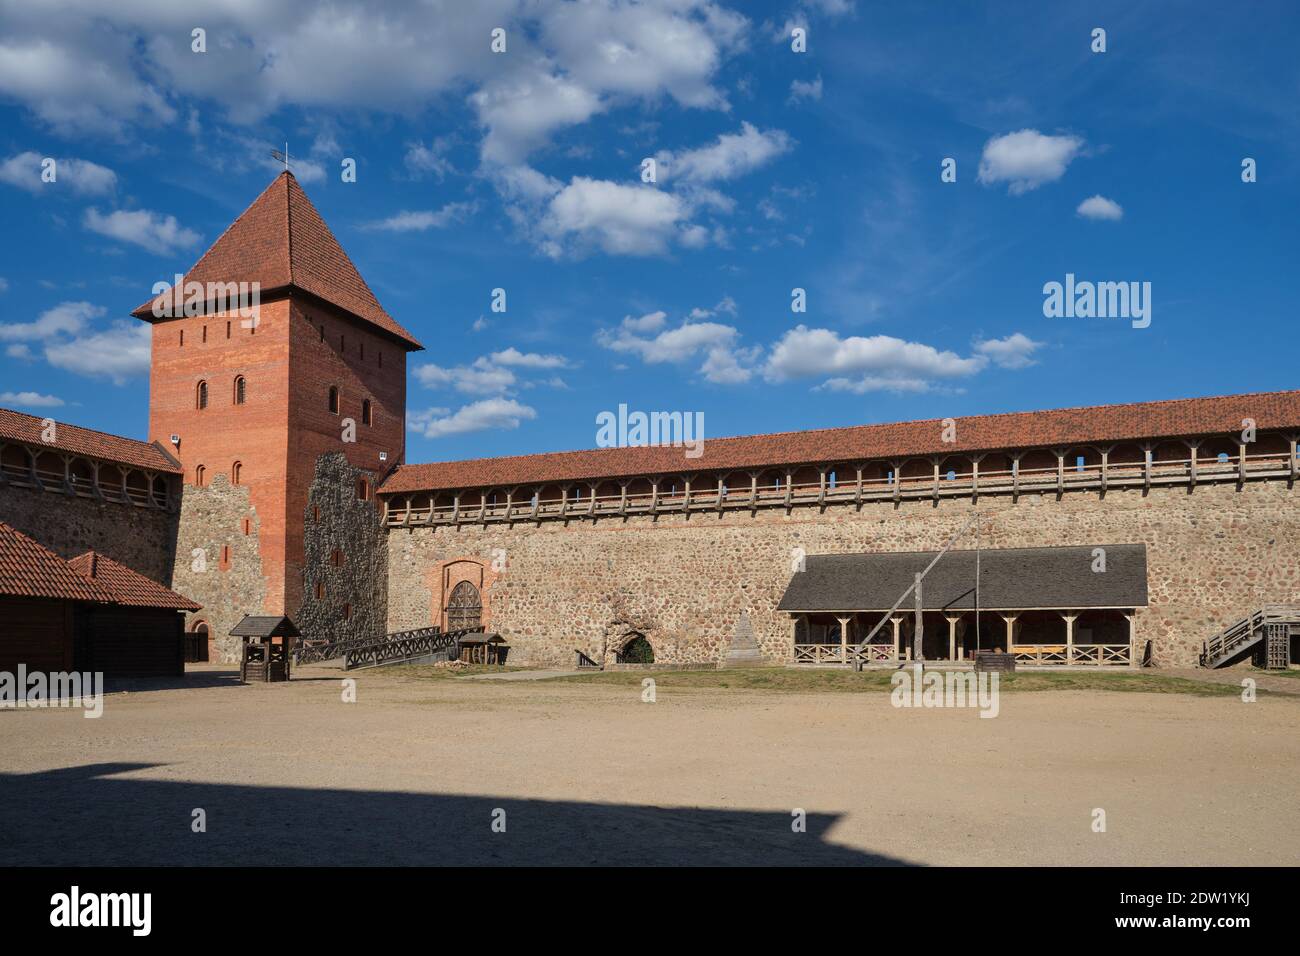 Belorussian tourist landmark attraction - Lida castle, Grodno region, Belarus. Stock Photo